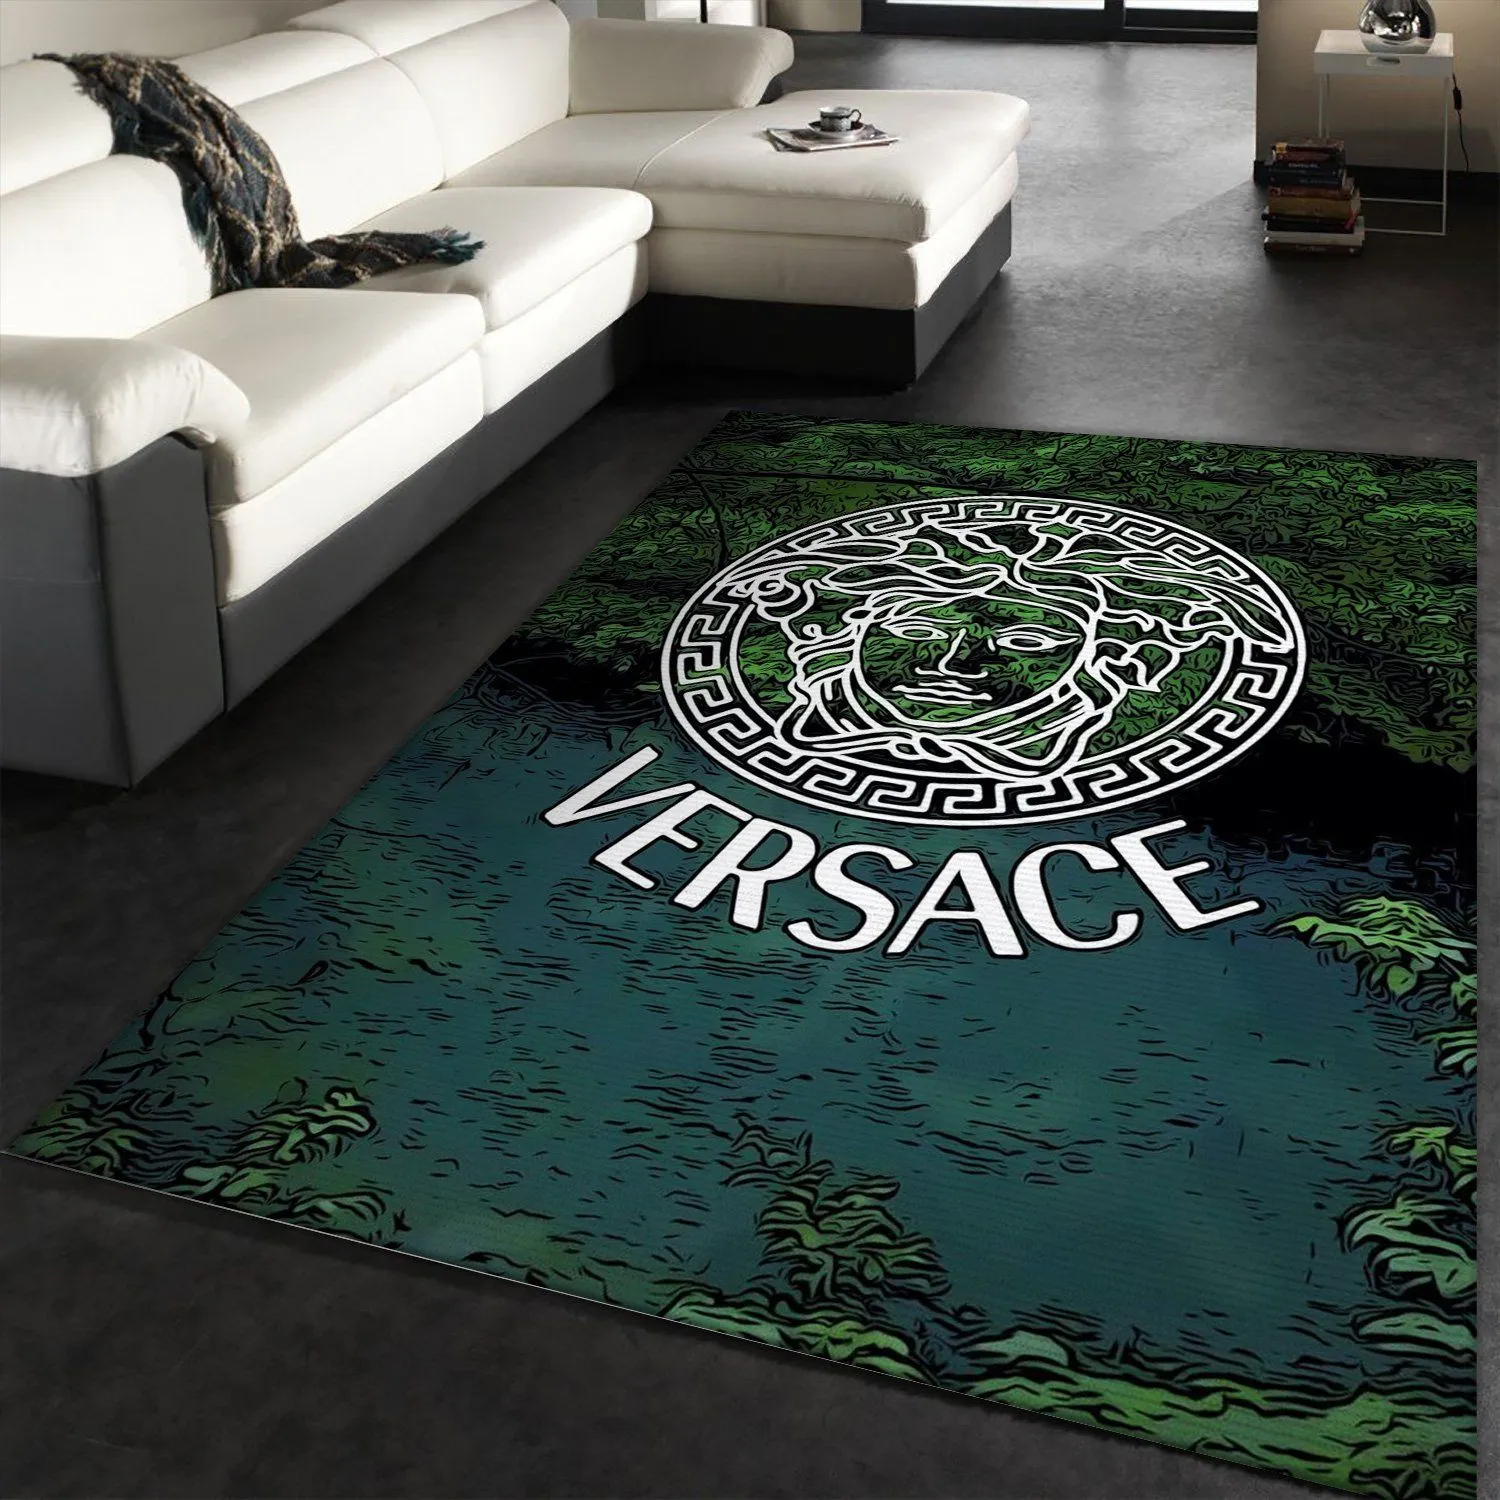 Versace Rectangle Rug Luxury Home Decor Door Mat Area Carpet Fashion Brand